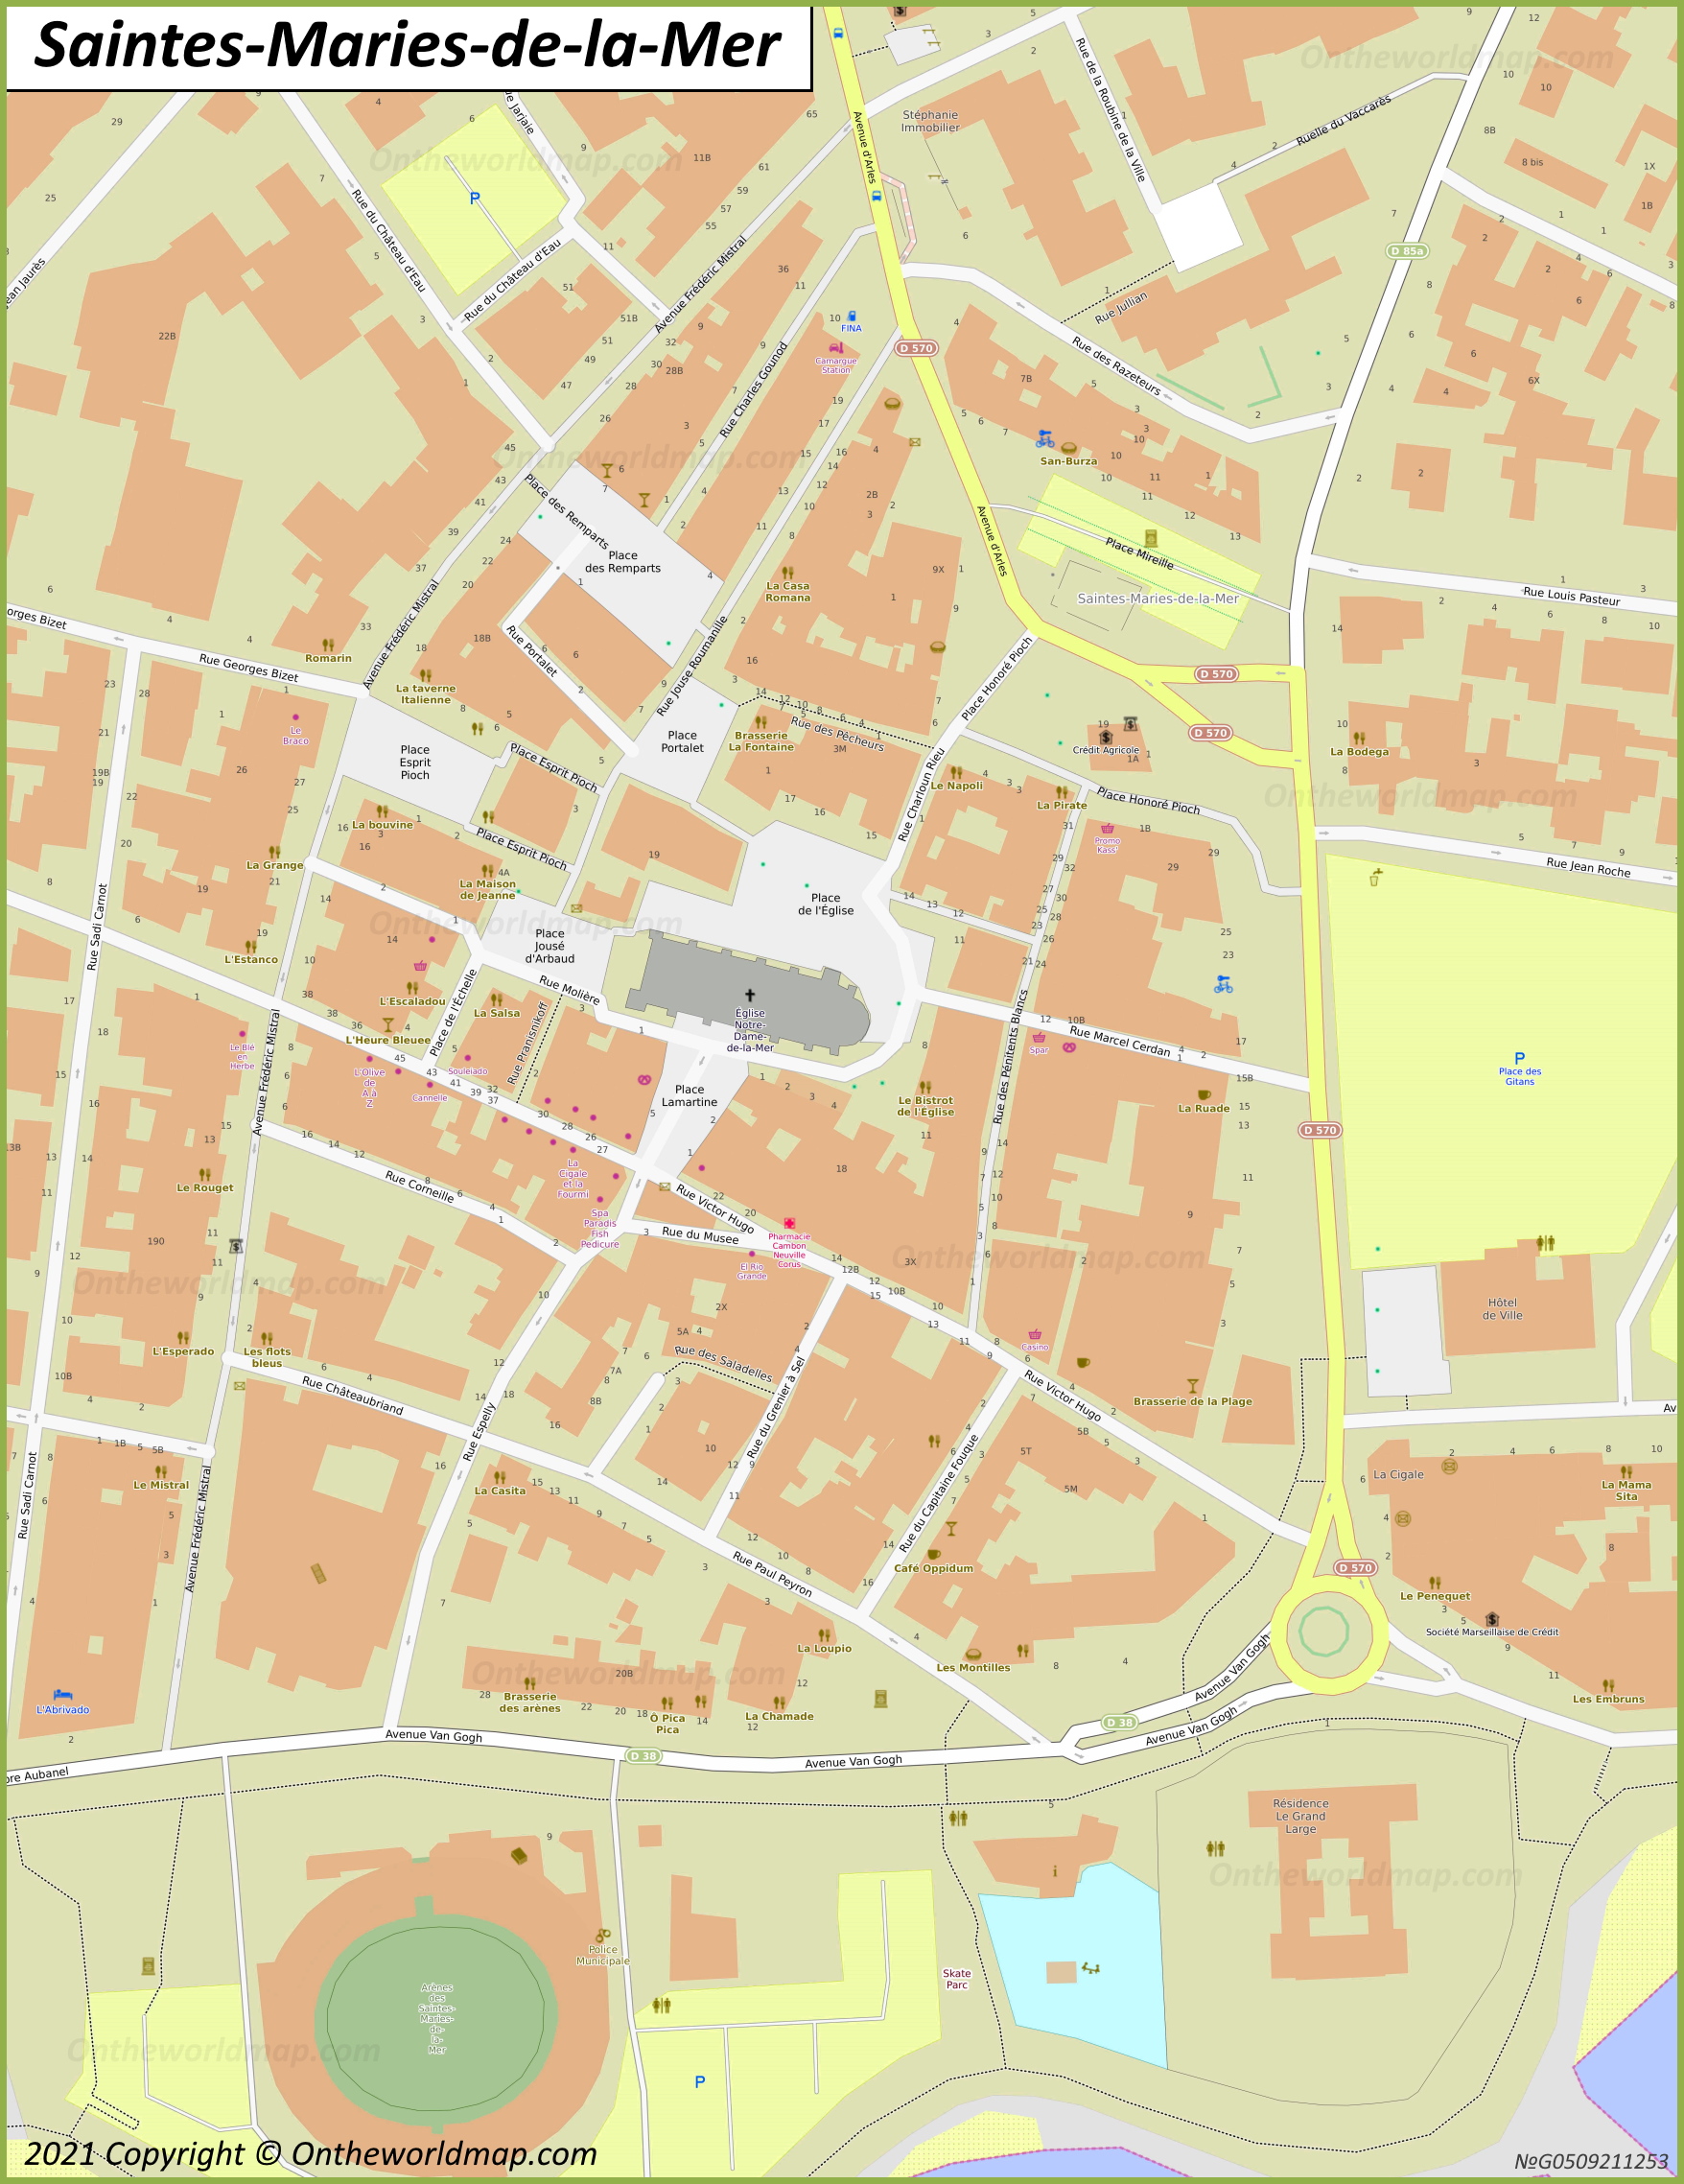 Saintes-Maries-de-la-Mer Old Town Map